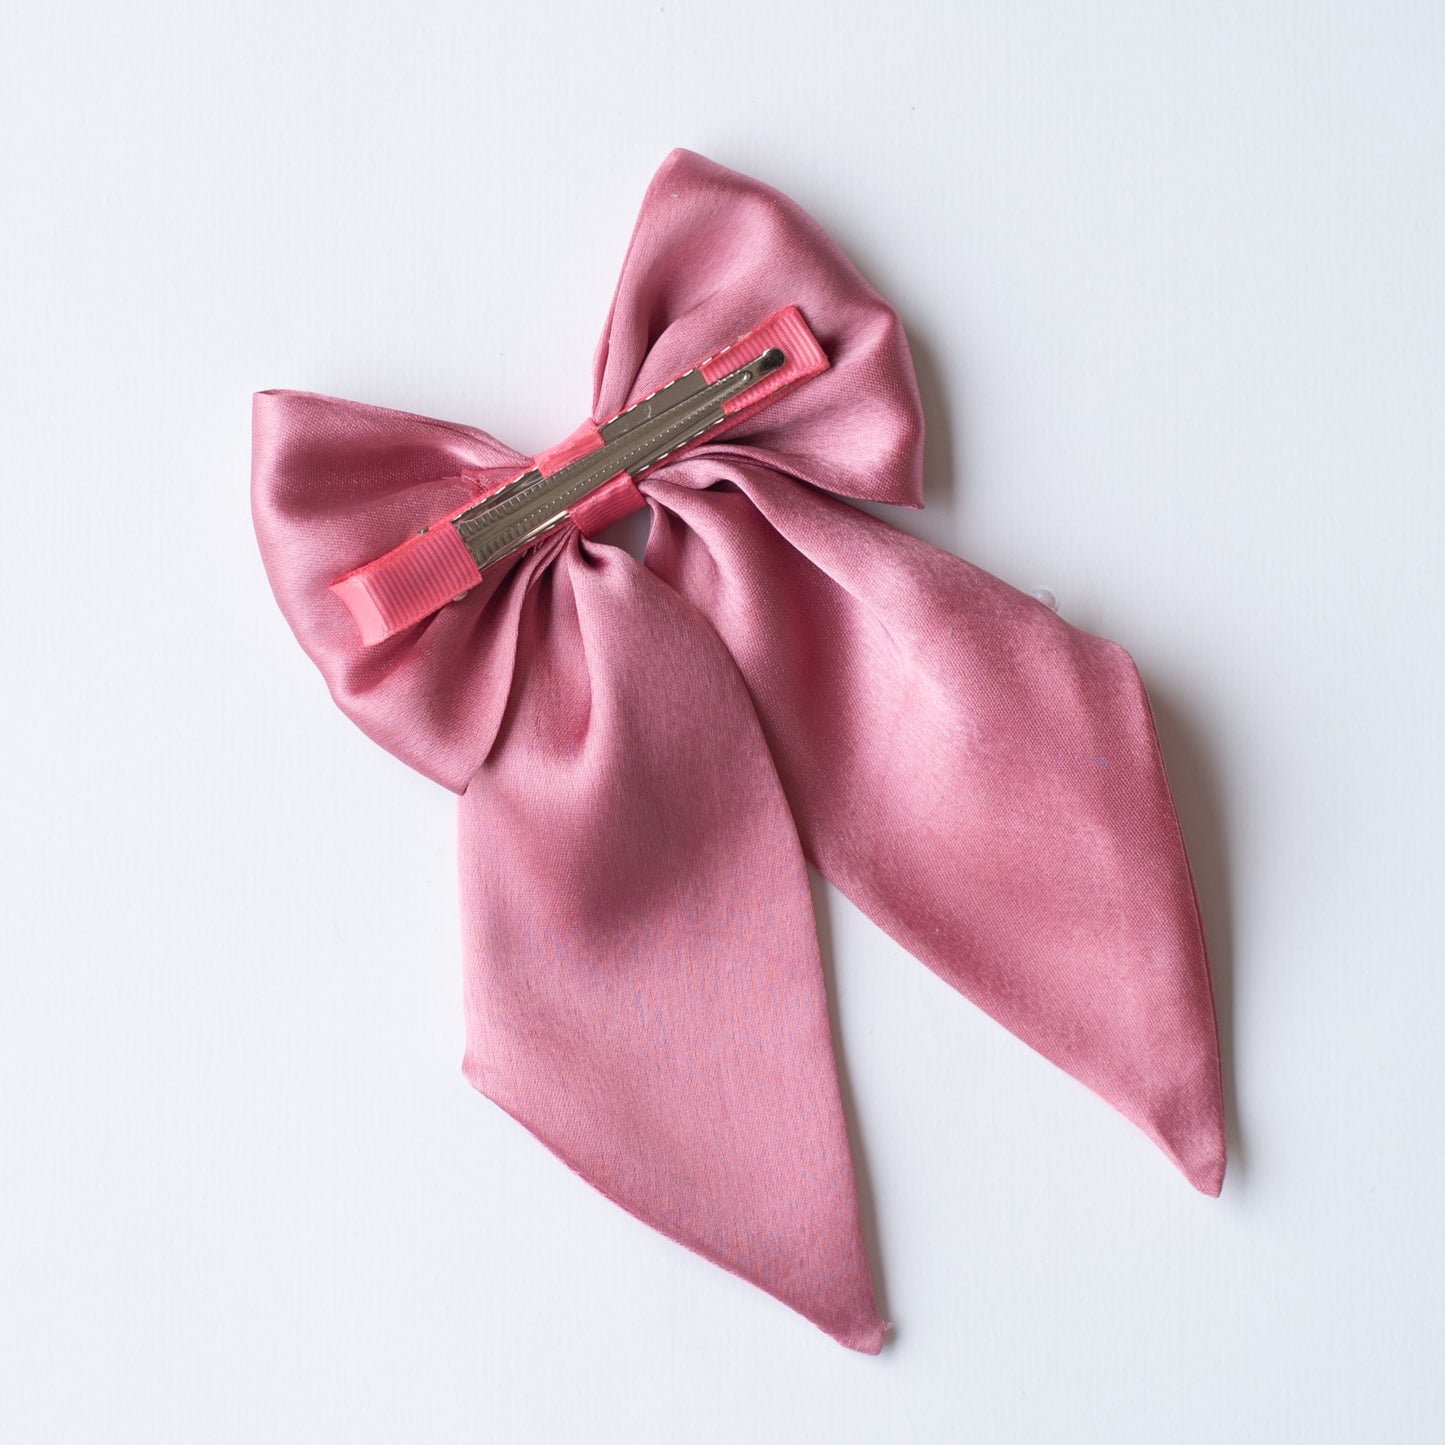 Big fancy satin bow on alligator clip embellished with pearls - Rose Pink